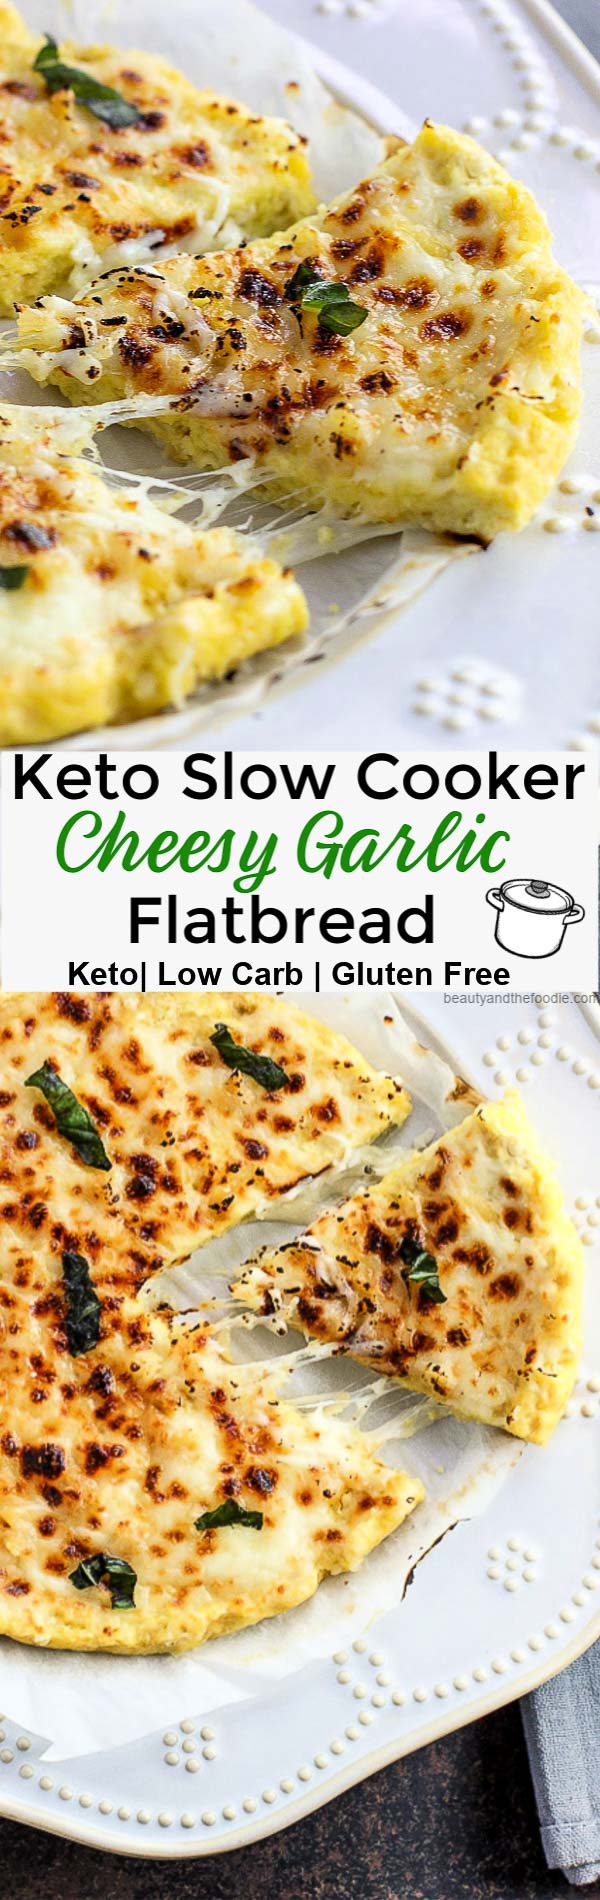 Keto Slow Cooker Cheesy Garlic Flatbread